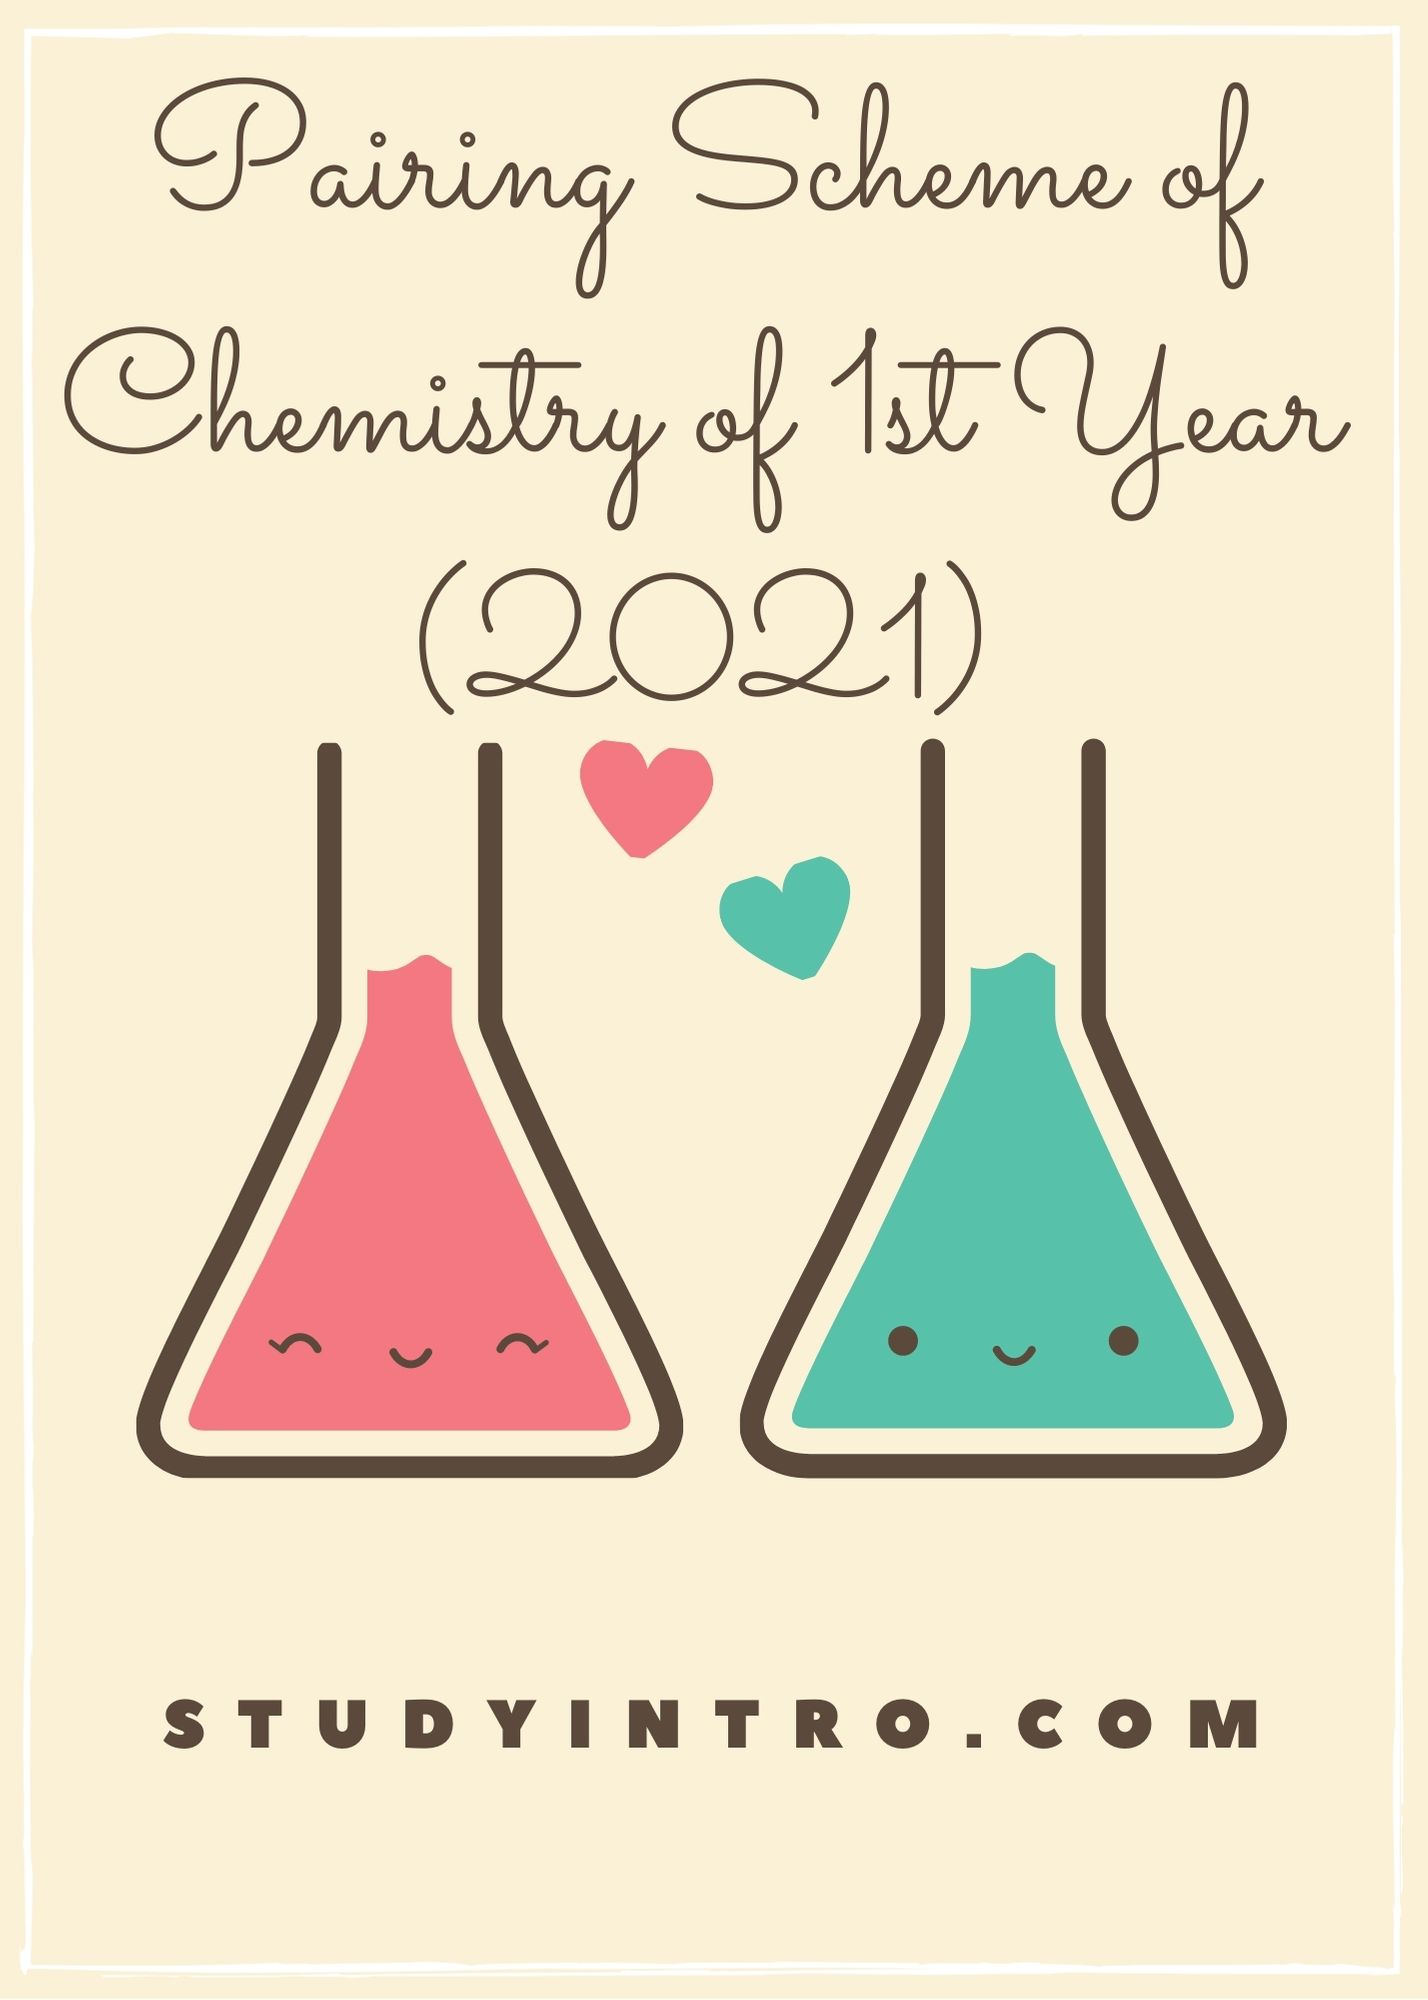 Pairing Scheme of Chemistry